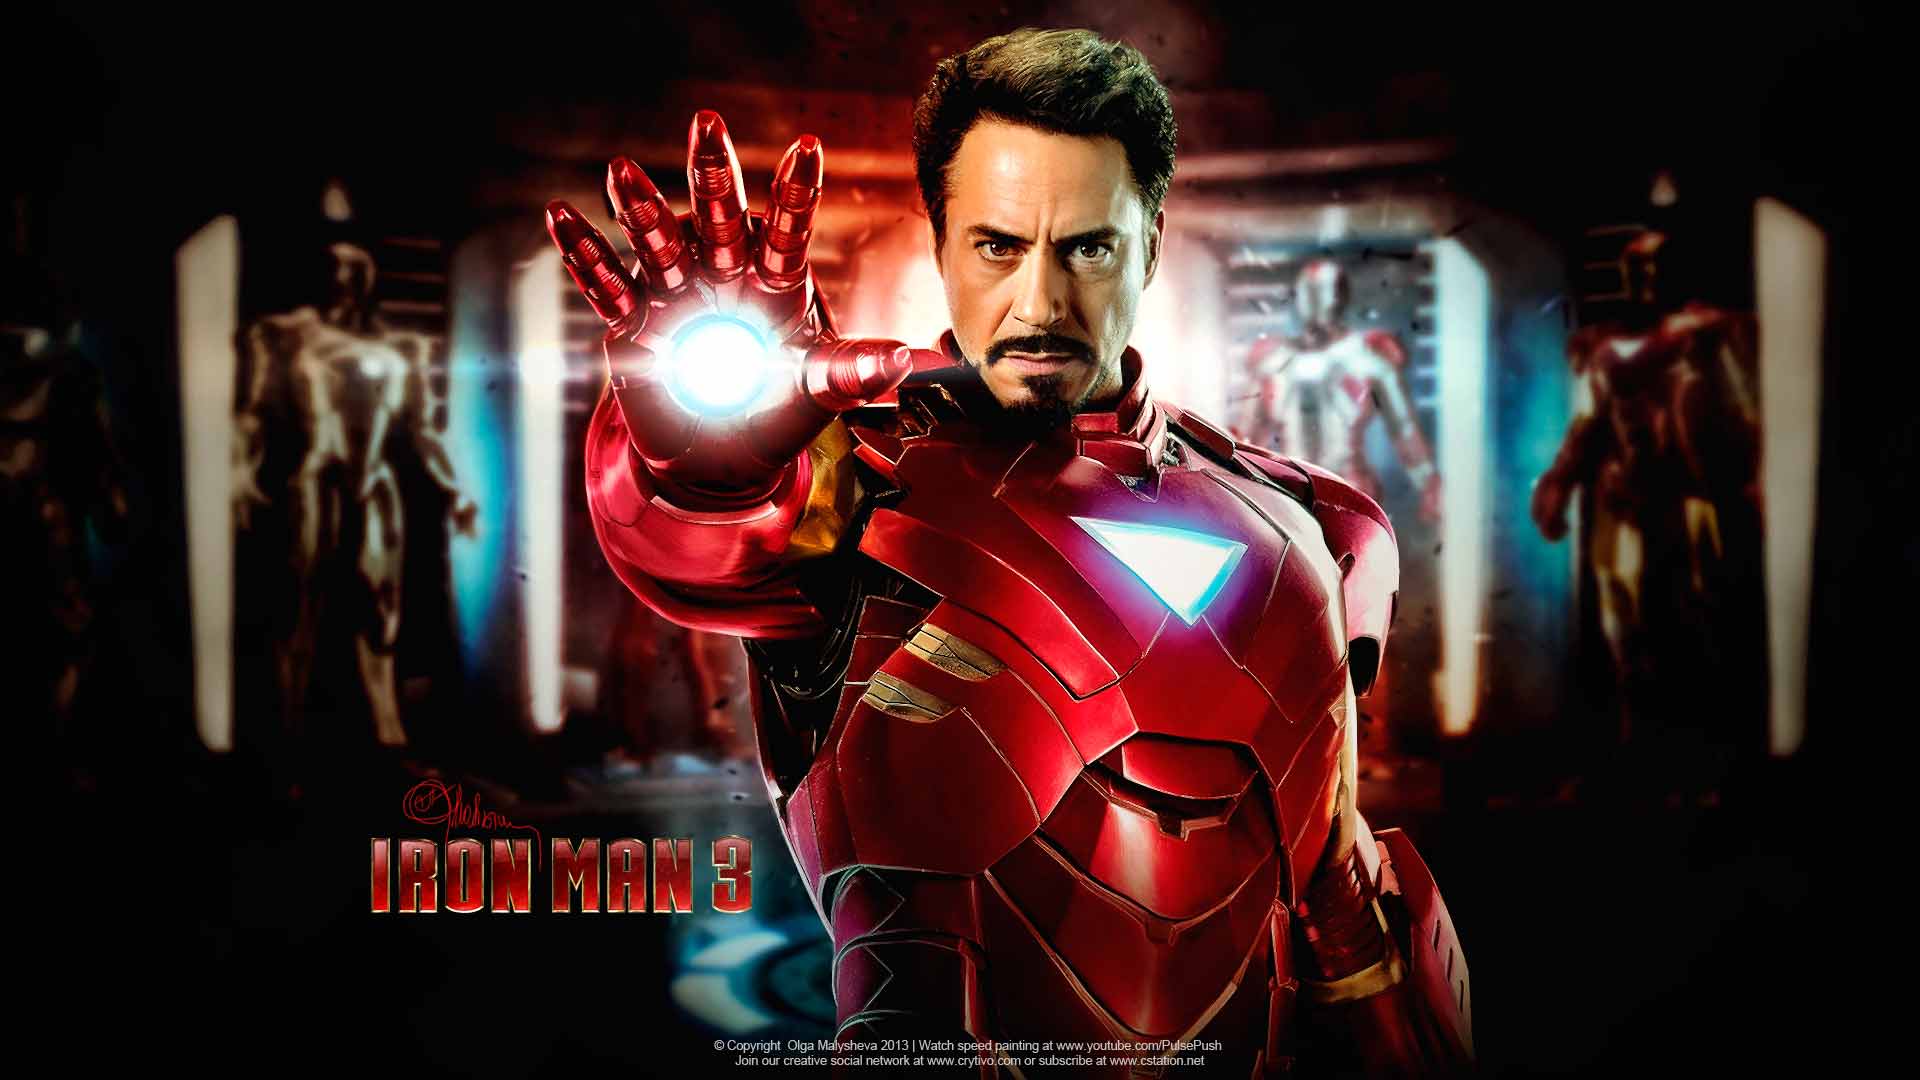 Iron Man 3 Wallpapers & Desktop Backgrounds Iron man 3 Backgrounds